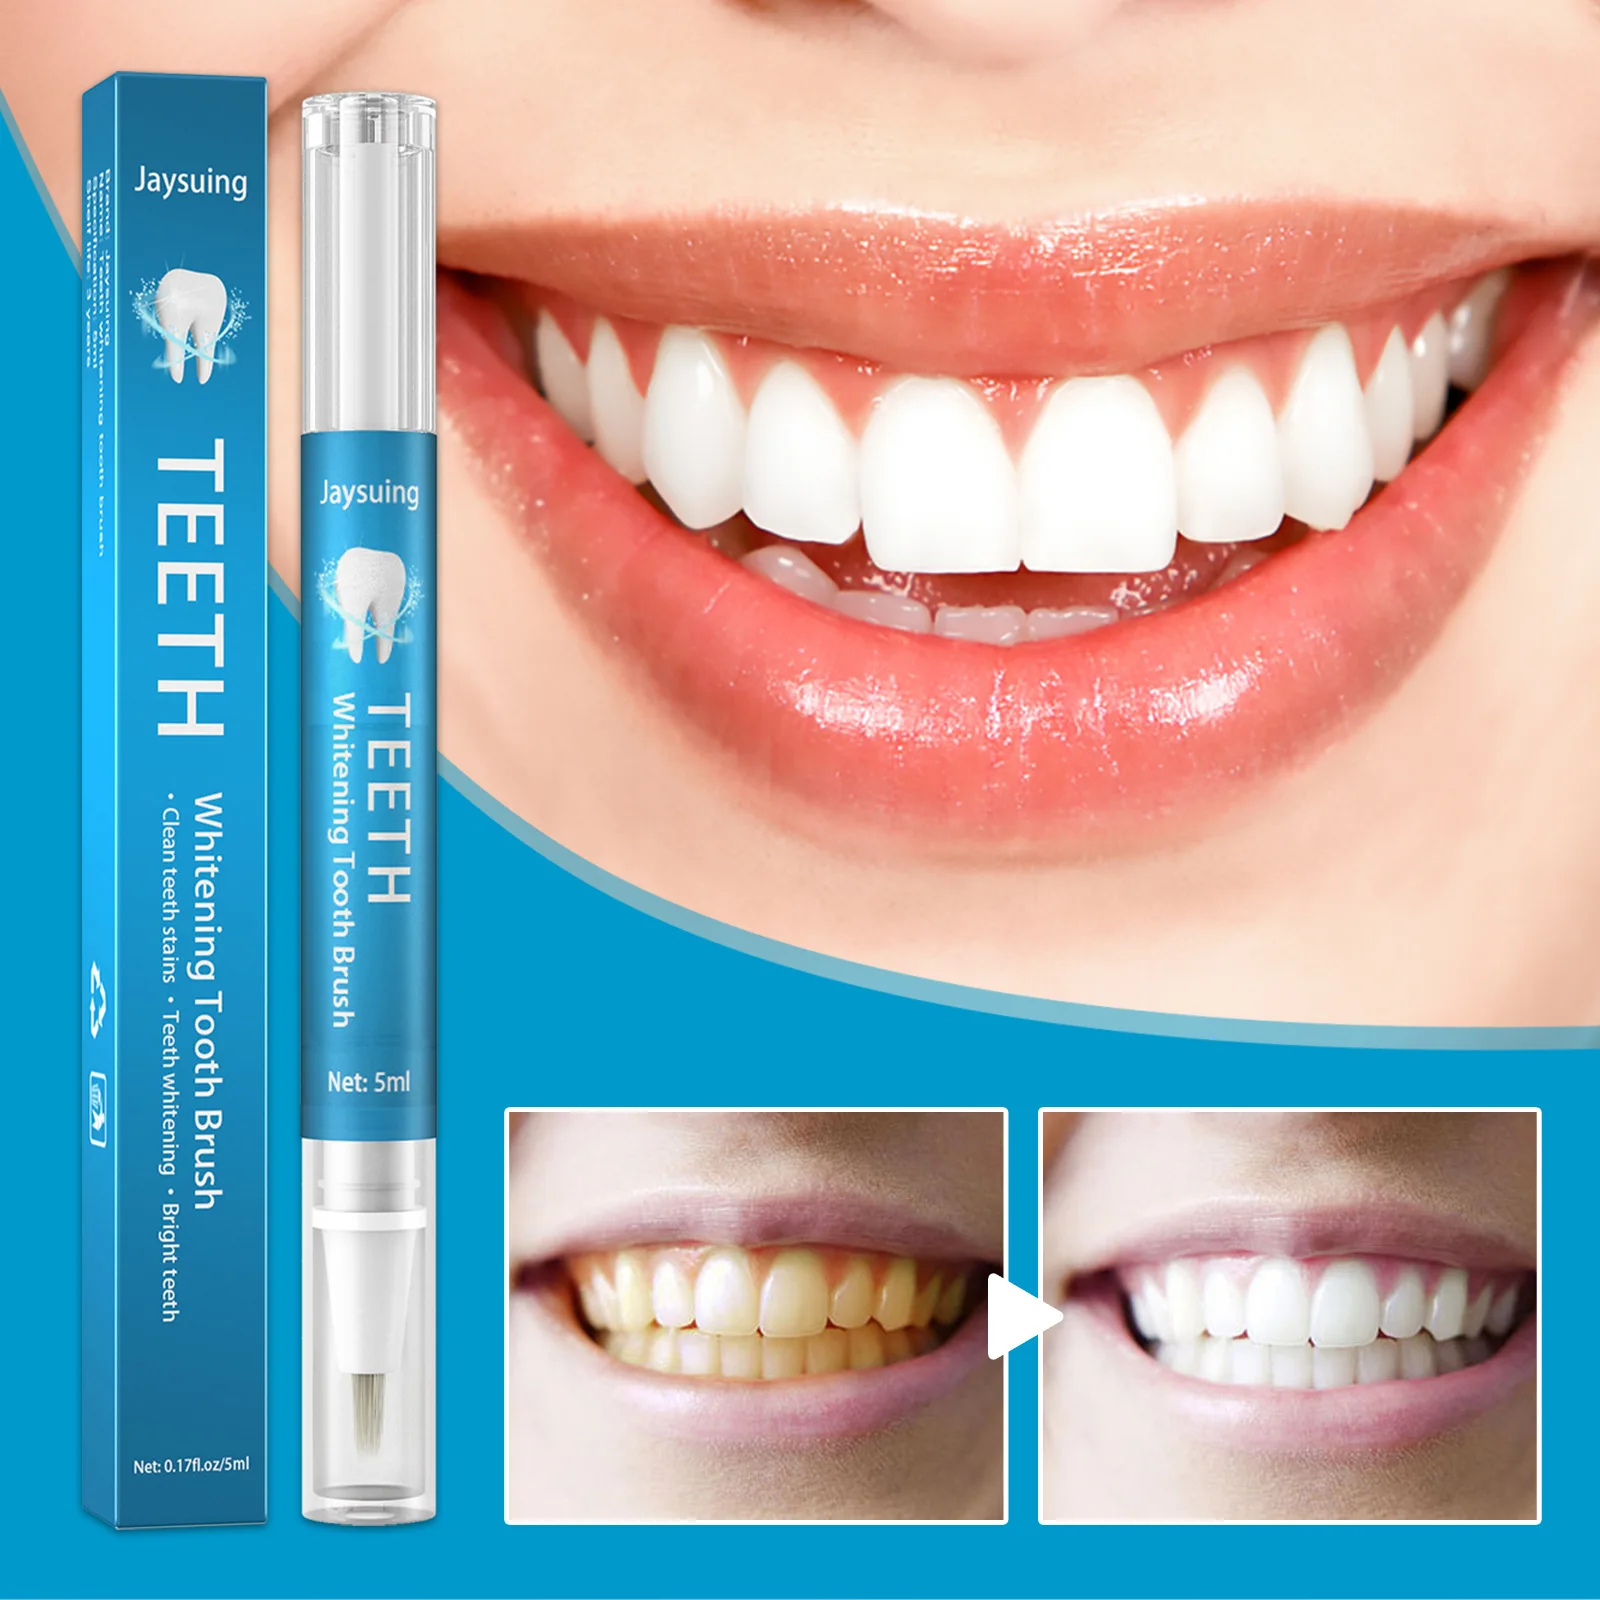 

New 5ml Teeth Whitening Pen Tooth Gel Whitener Bleach Remove Stain Oral Hygiene Instant Smile Teeth Whitening Kit Cleaning Serum